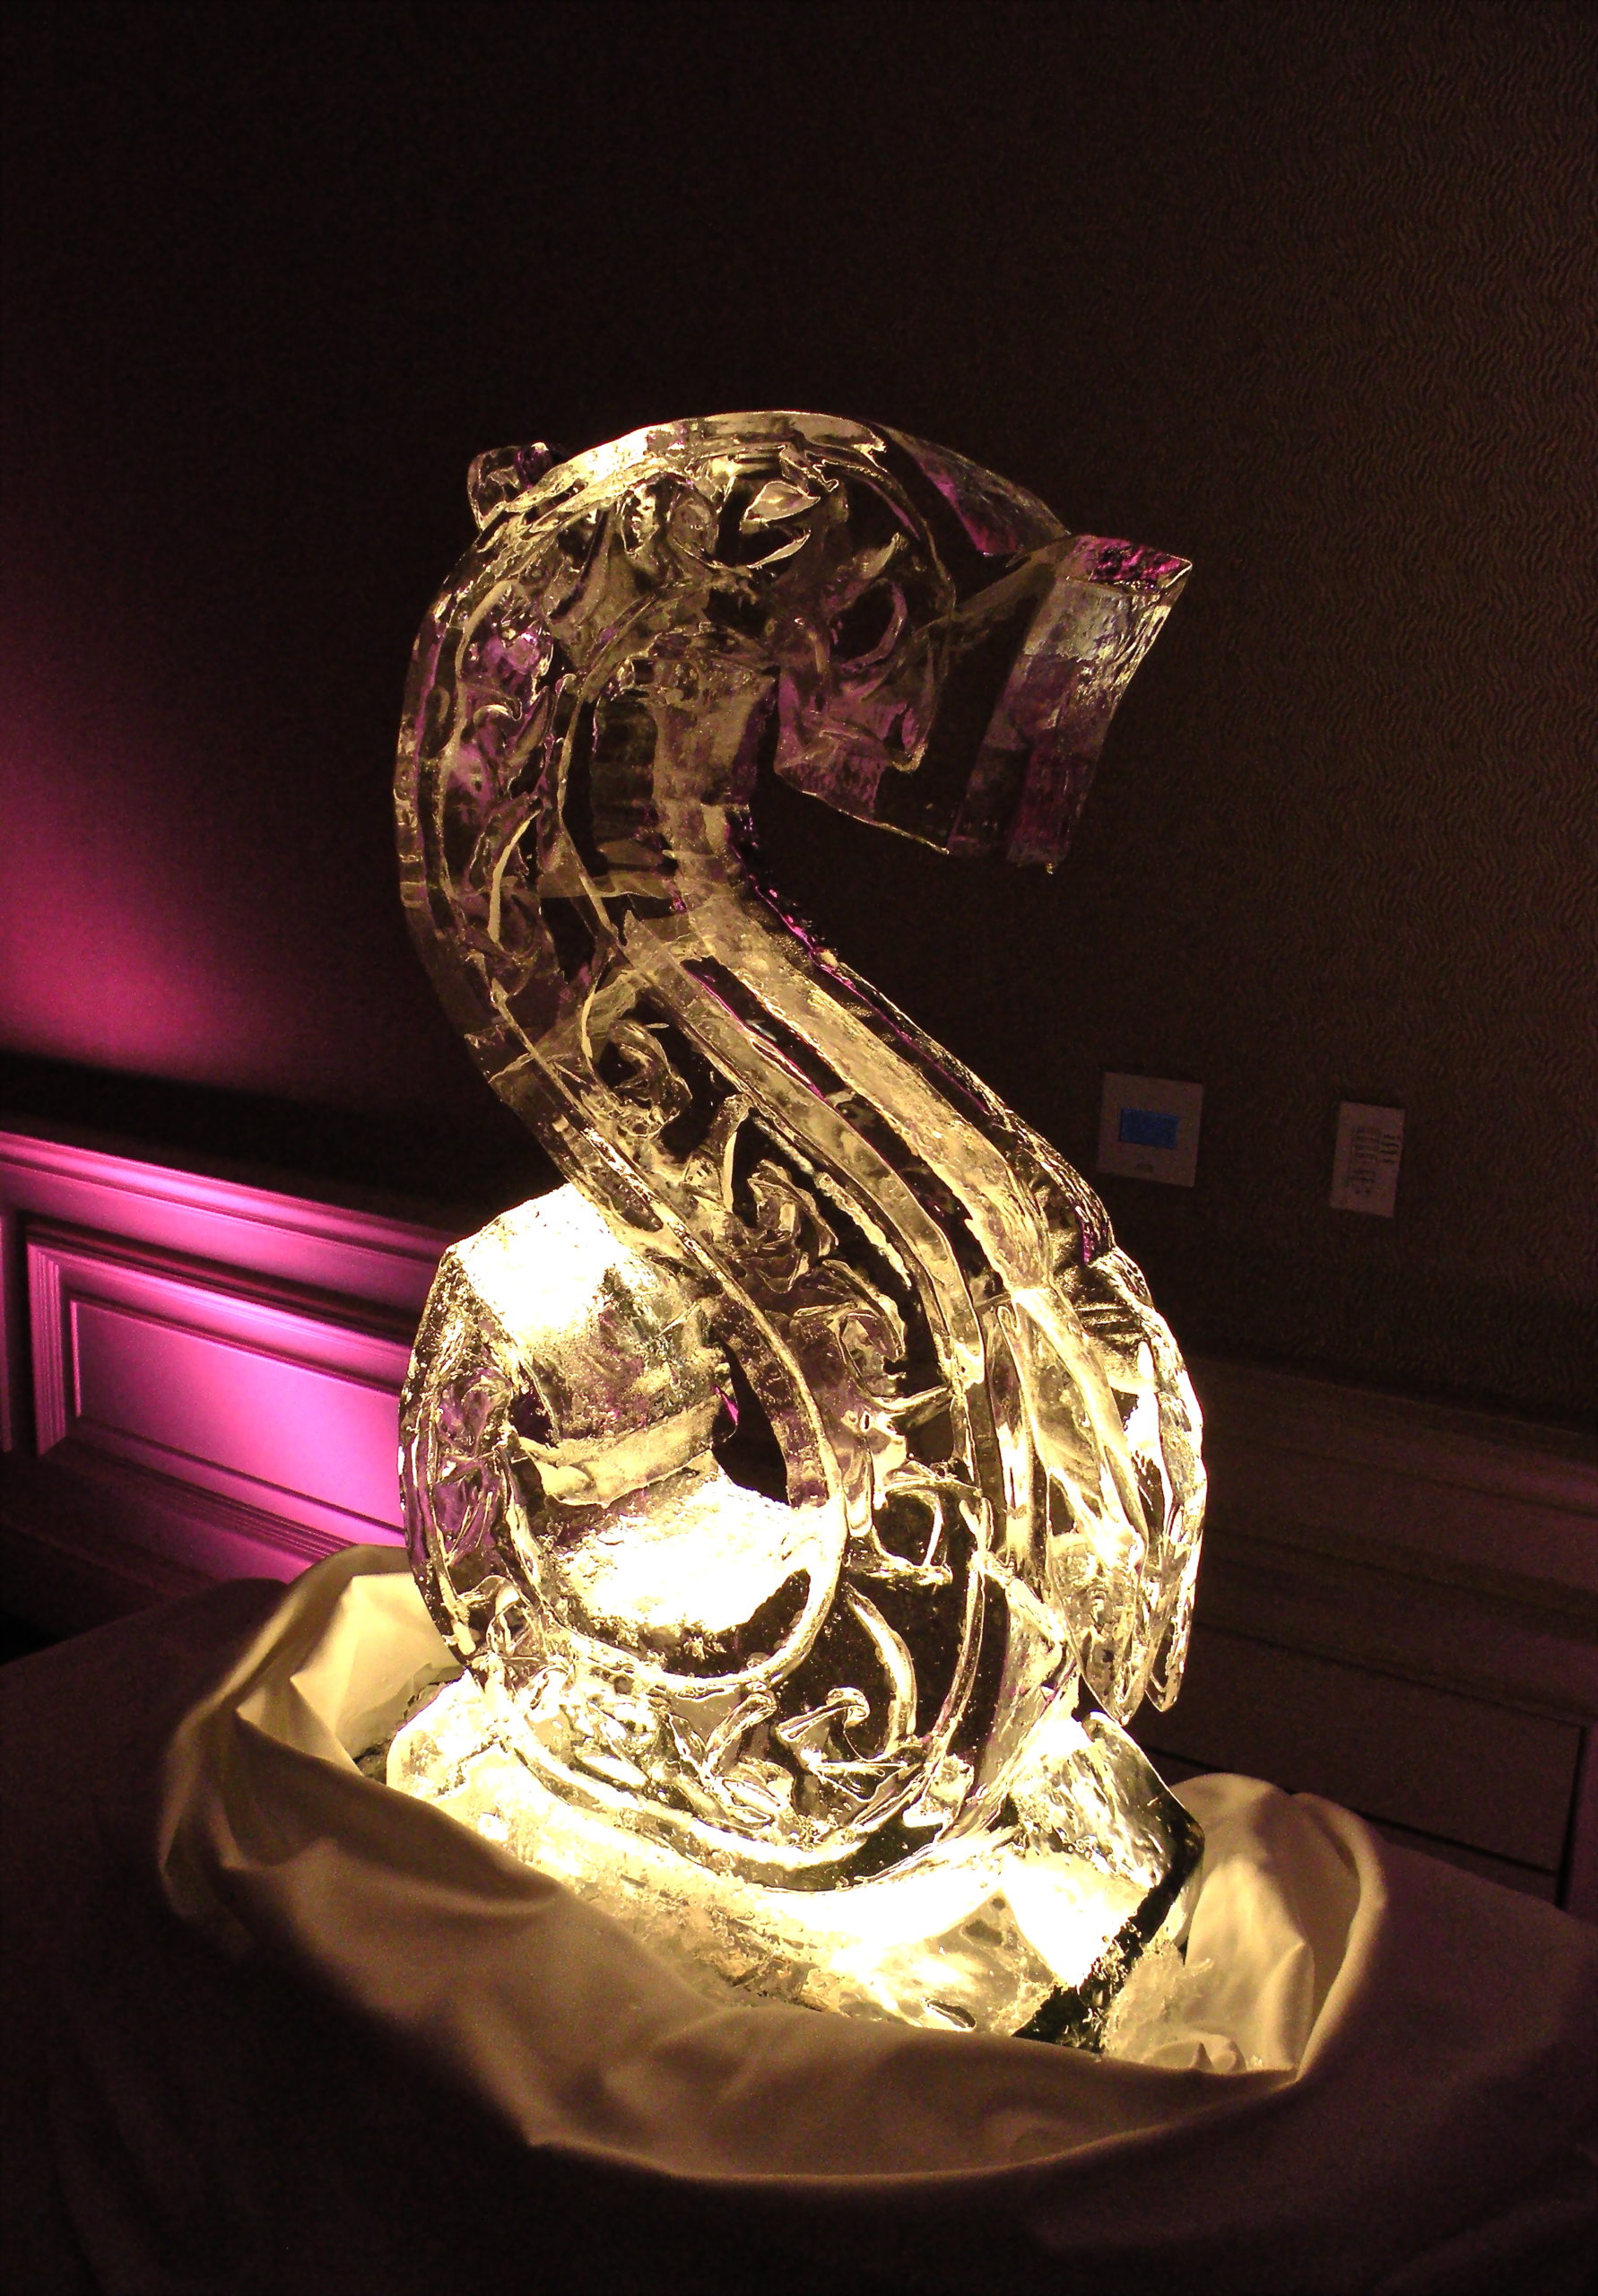 Dragon Ice Sculpture Luge Chicago Restaurant Event